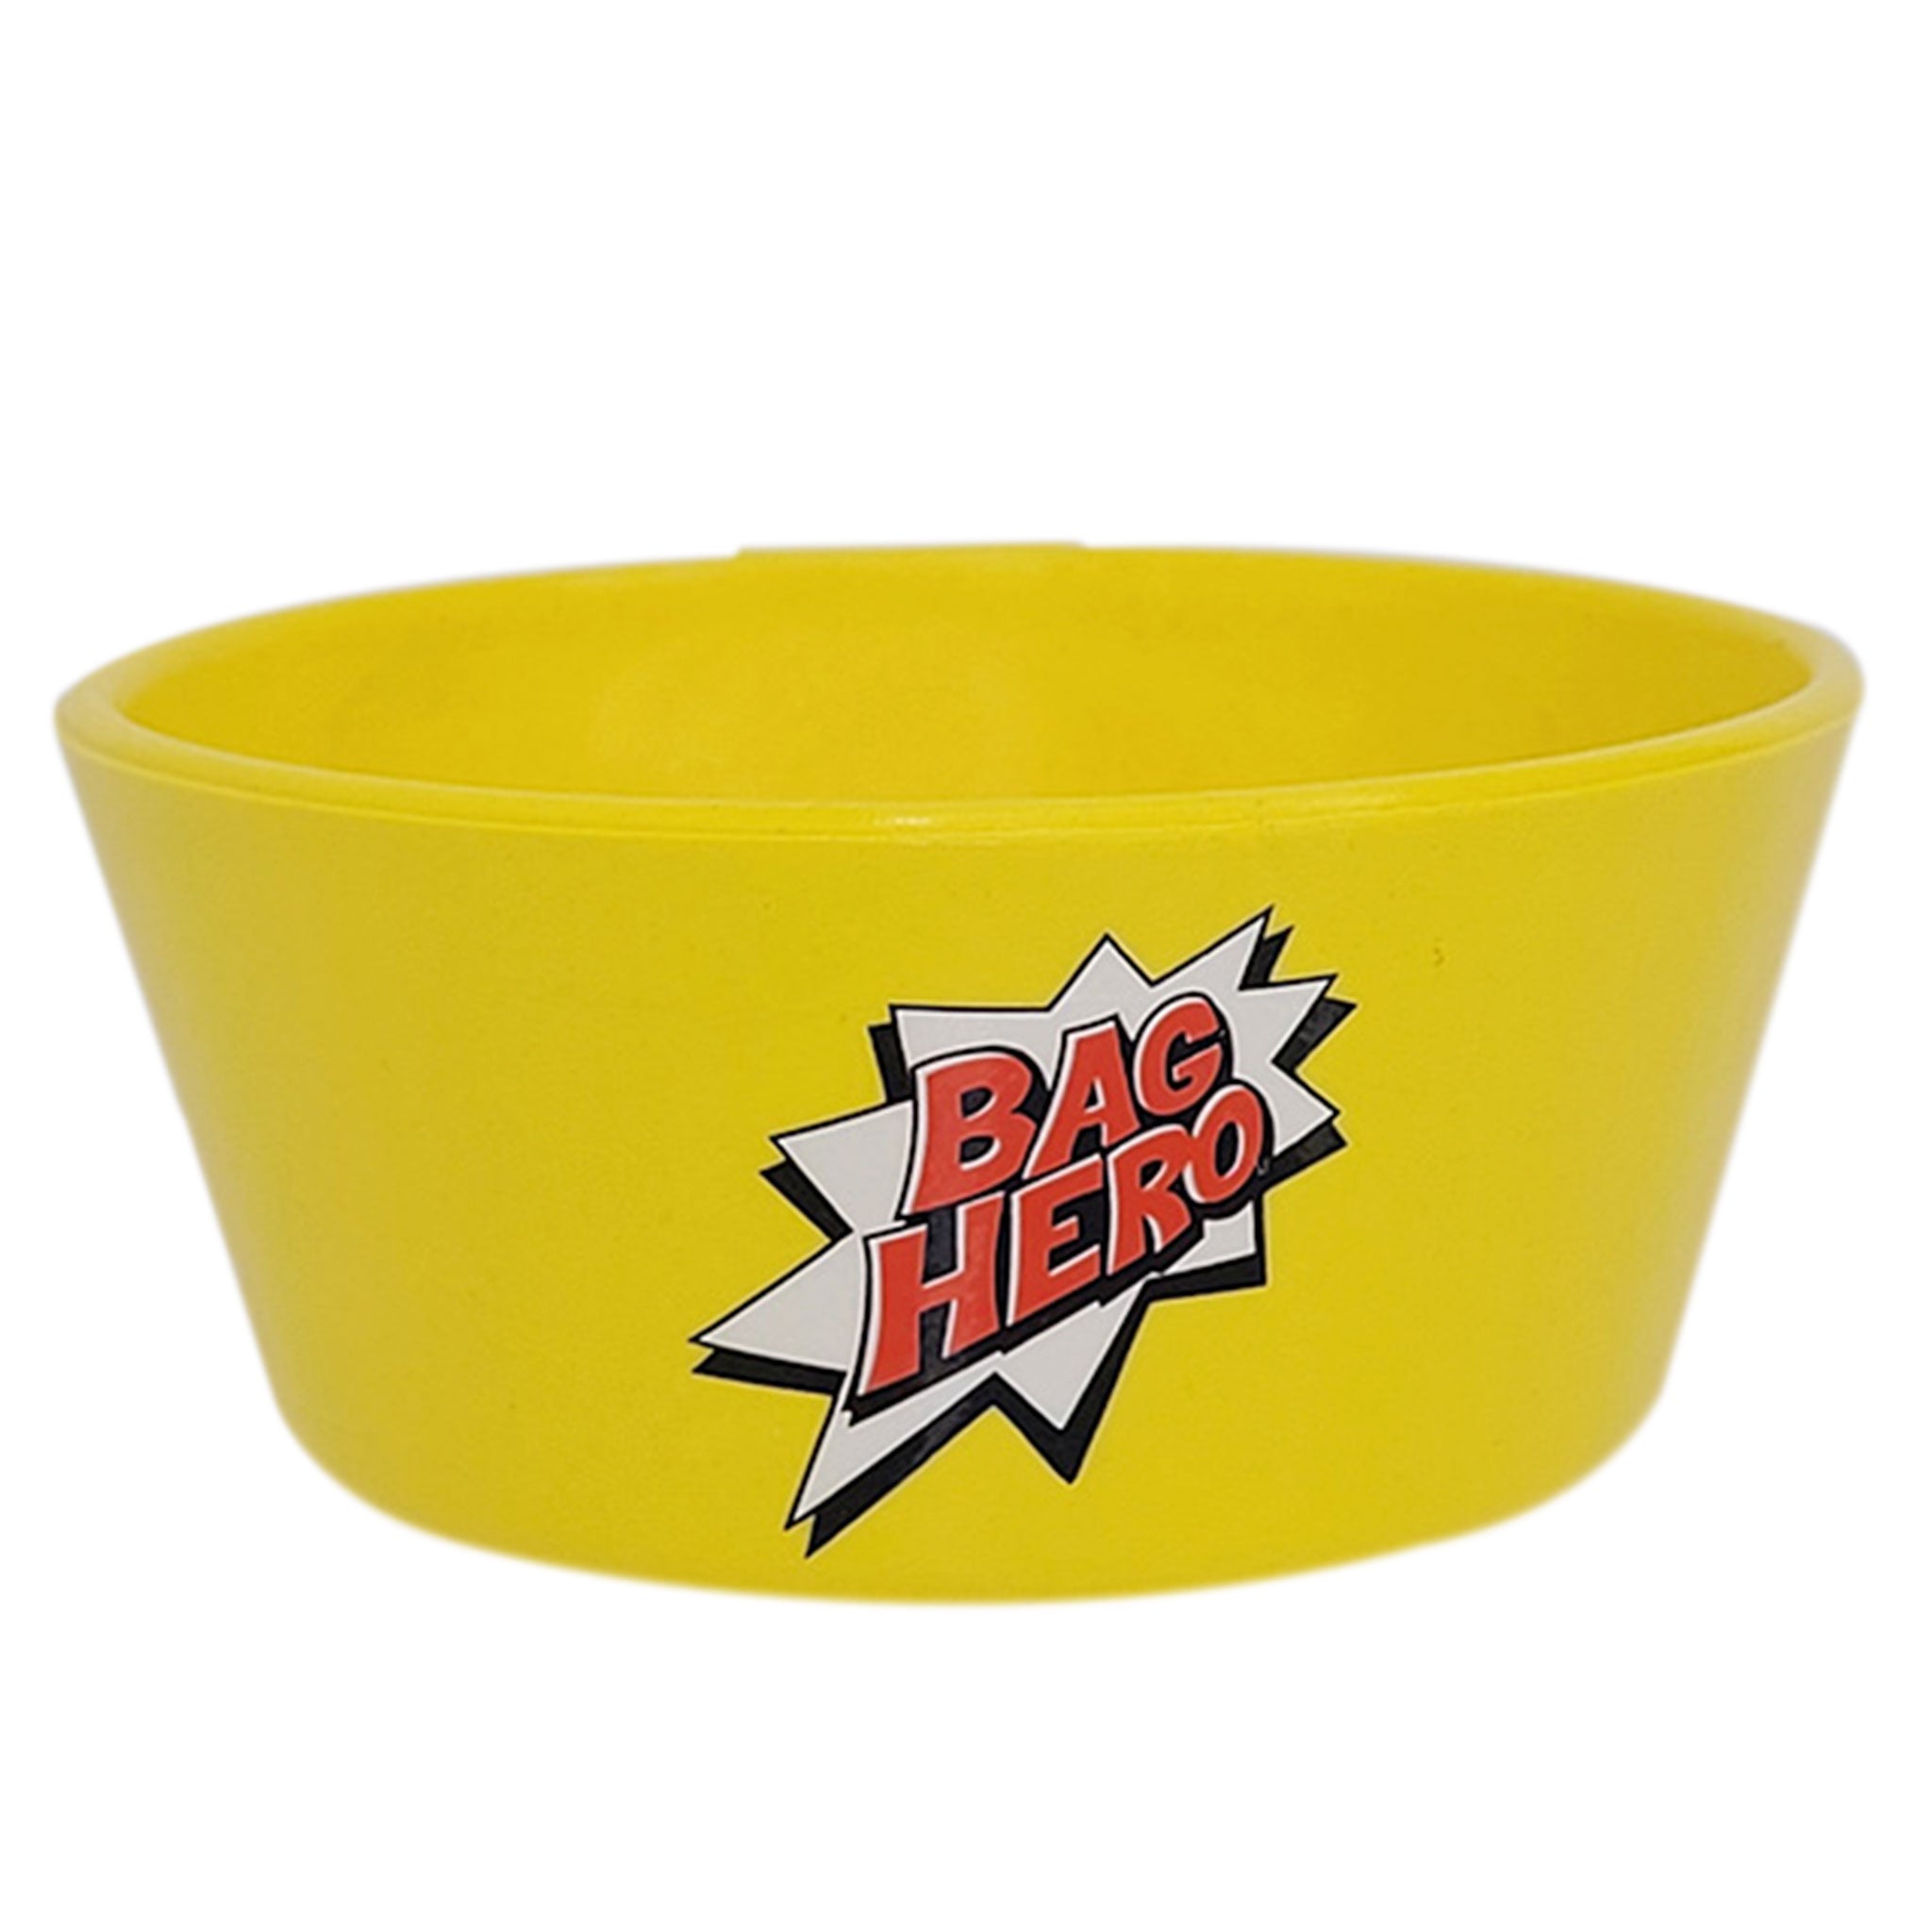 Bag Hero Bowl (the Salsa Sidekick!)